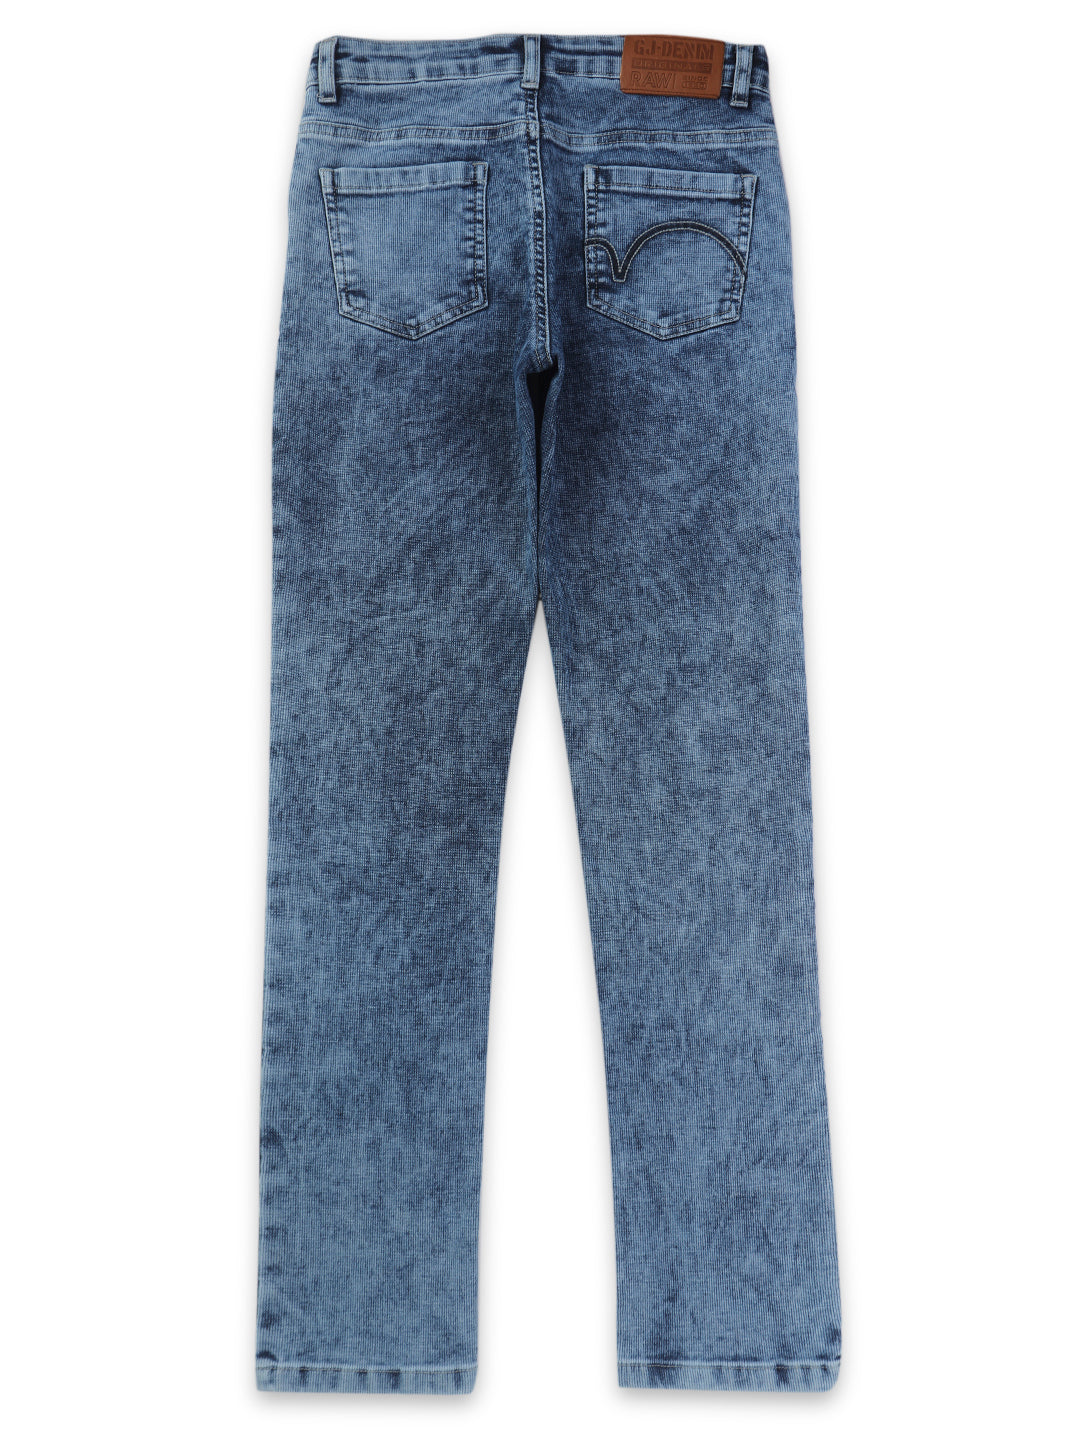 Boys Blue Denim Solid Elasticated Jeans